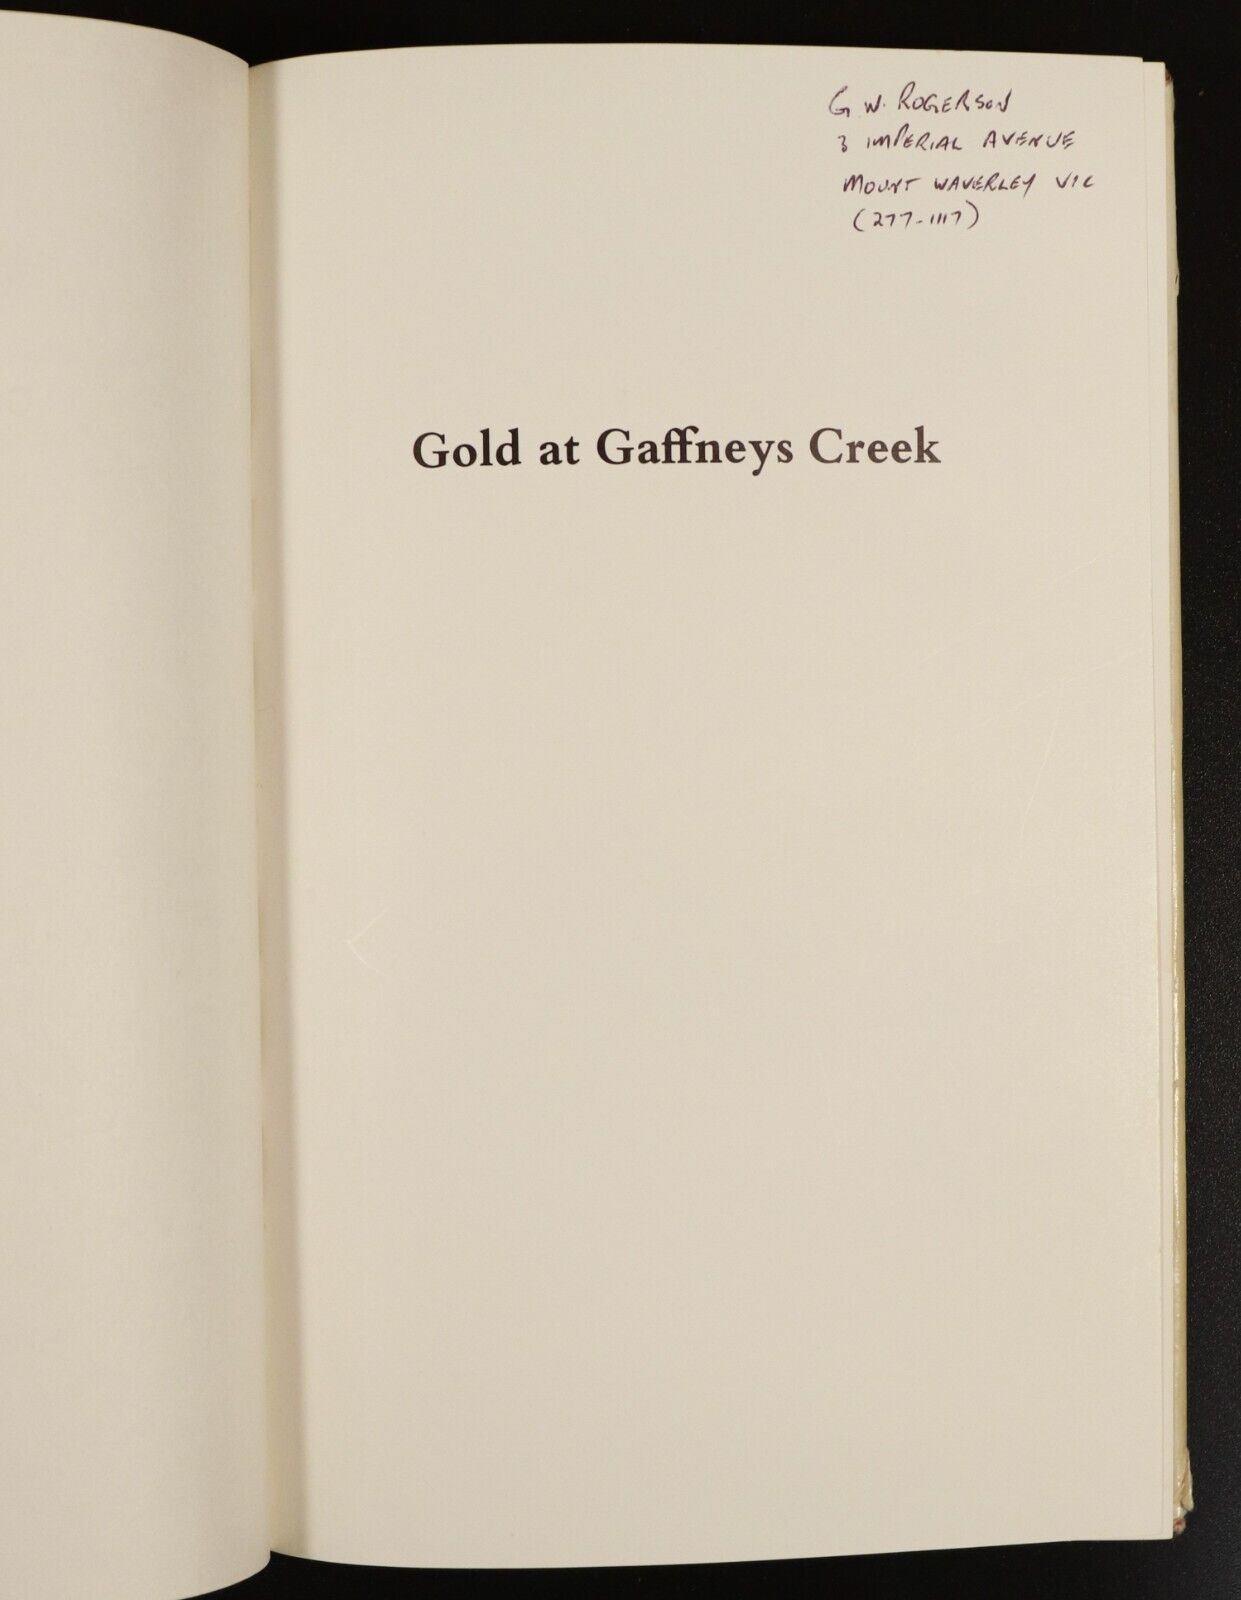 1981 Gold At Gaffneys Creek by Brian Lloyd Australian Gold Mining History Book